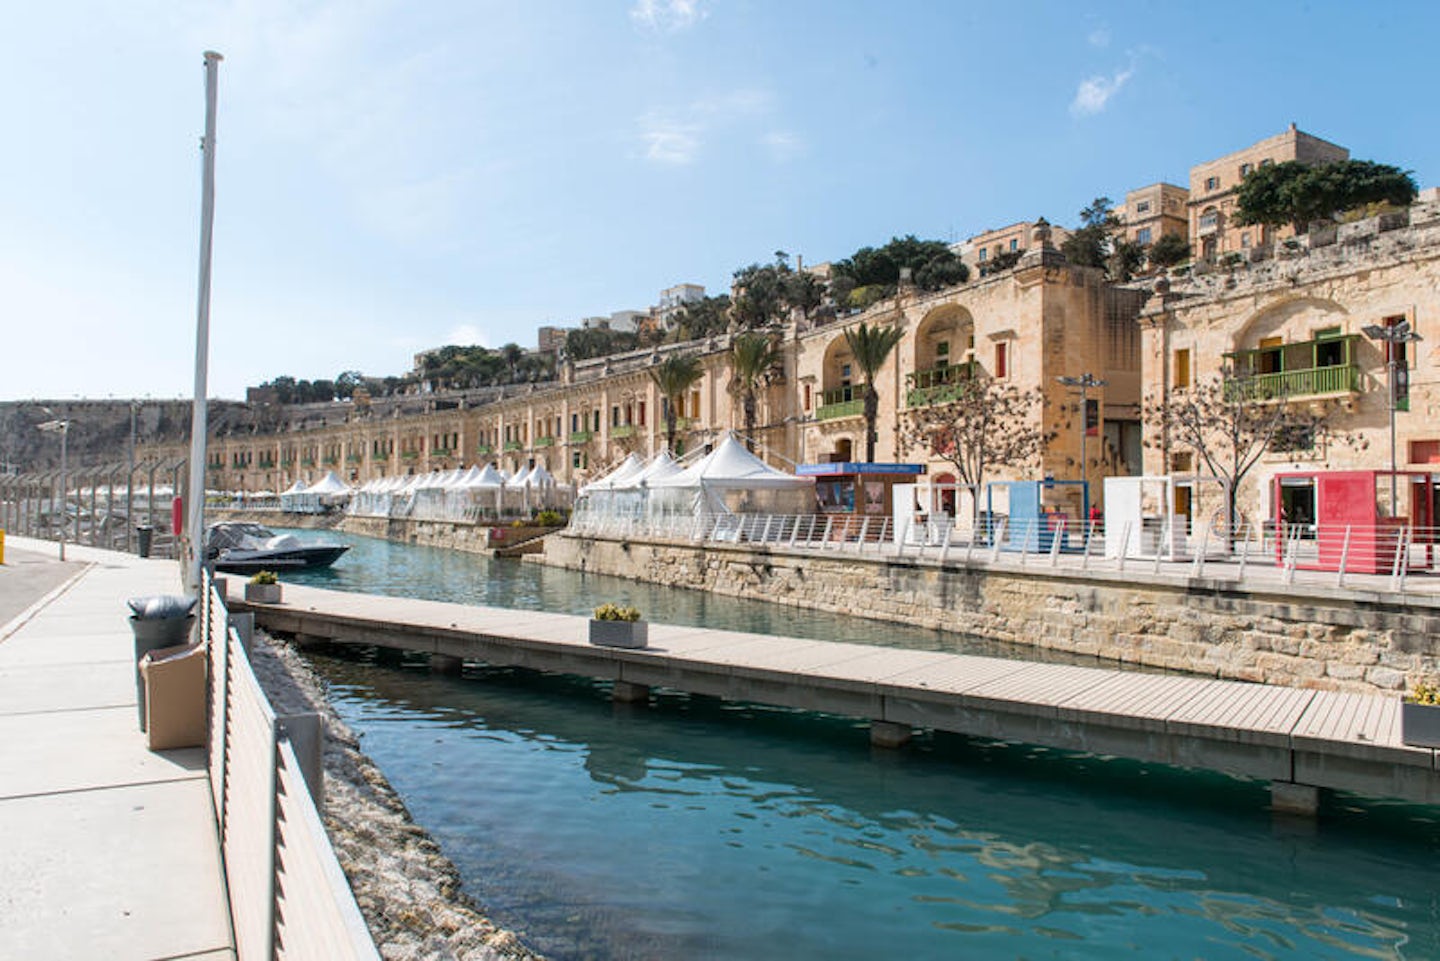 Malta Cruise Port